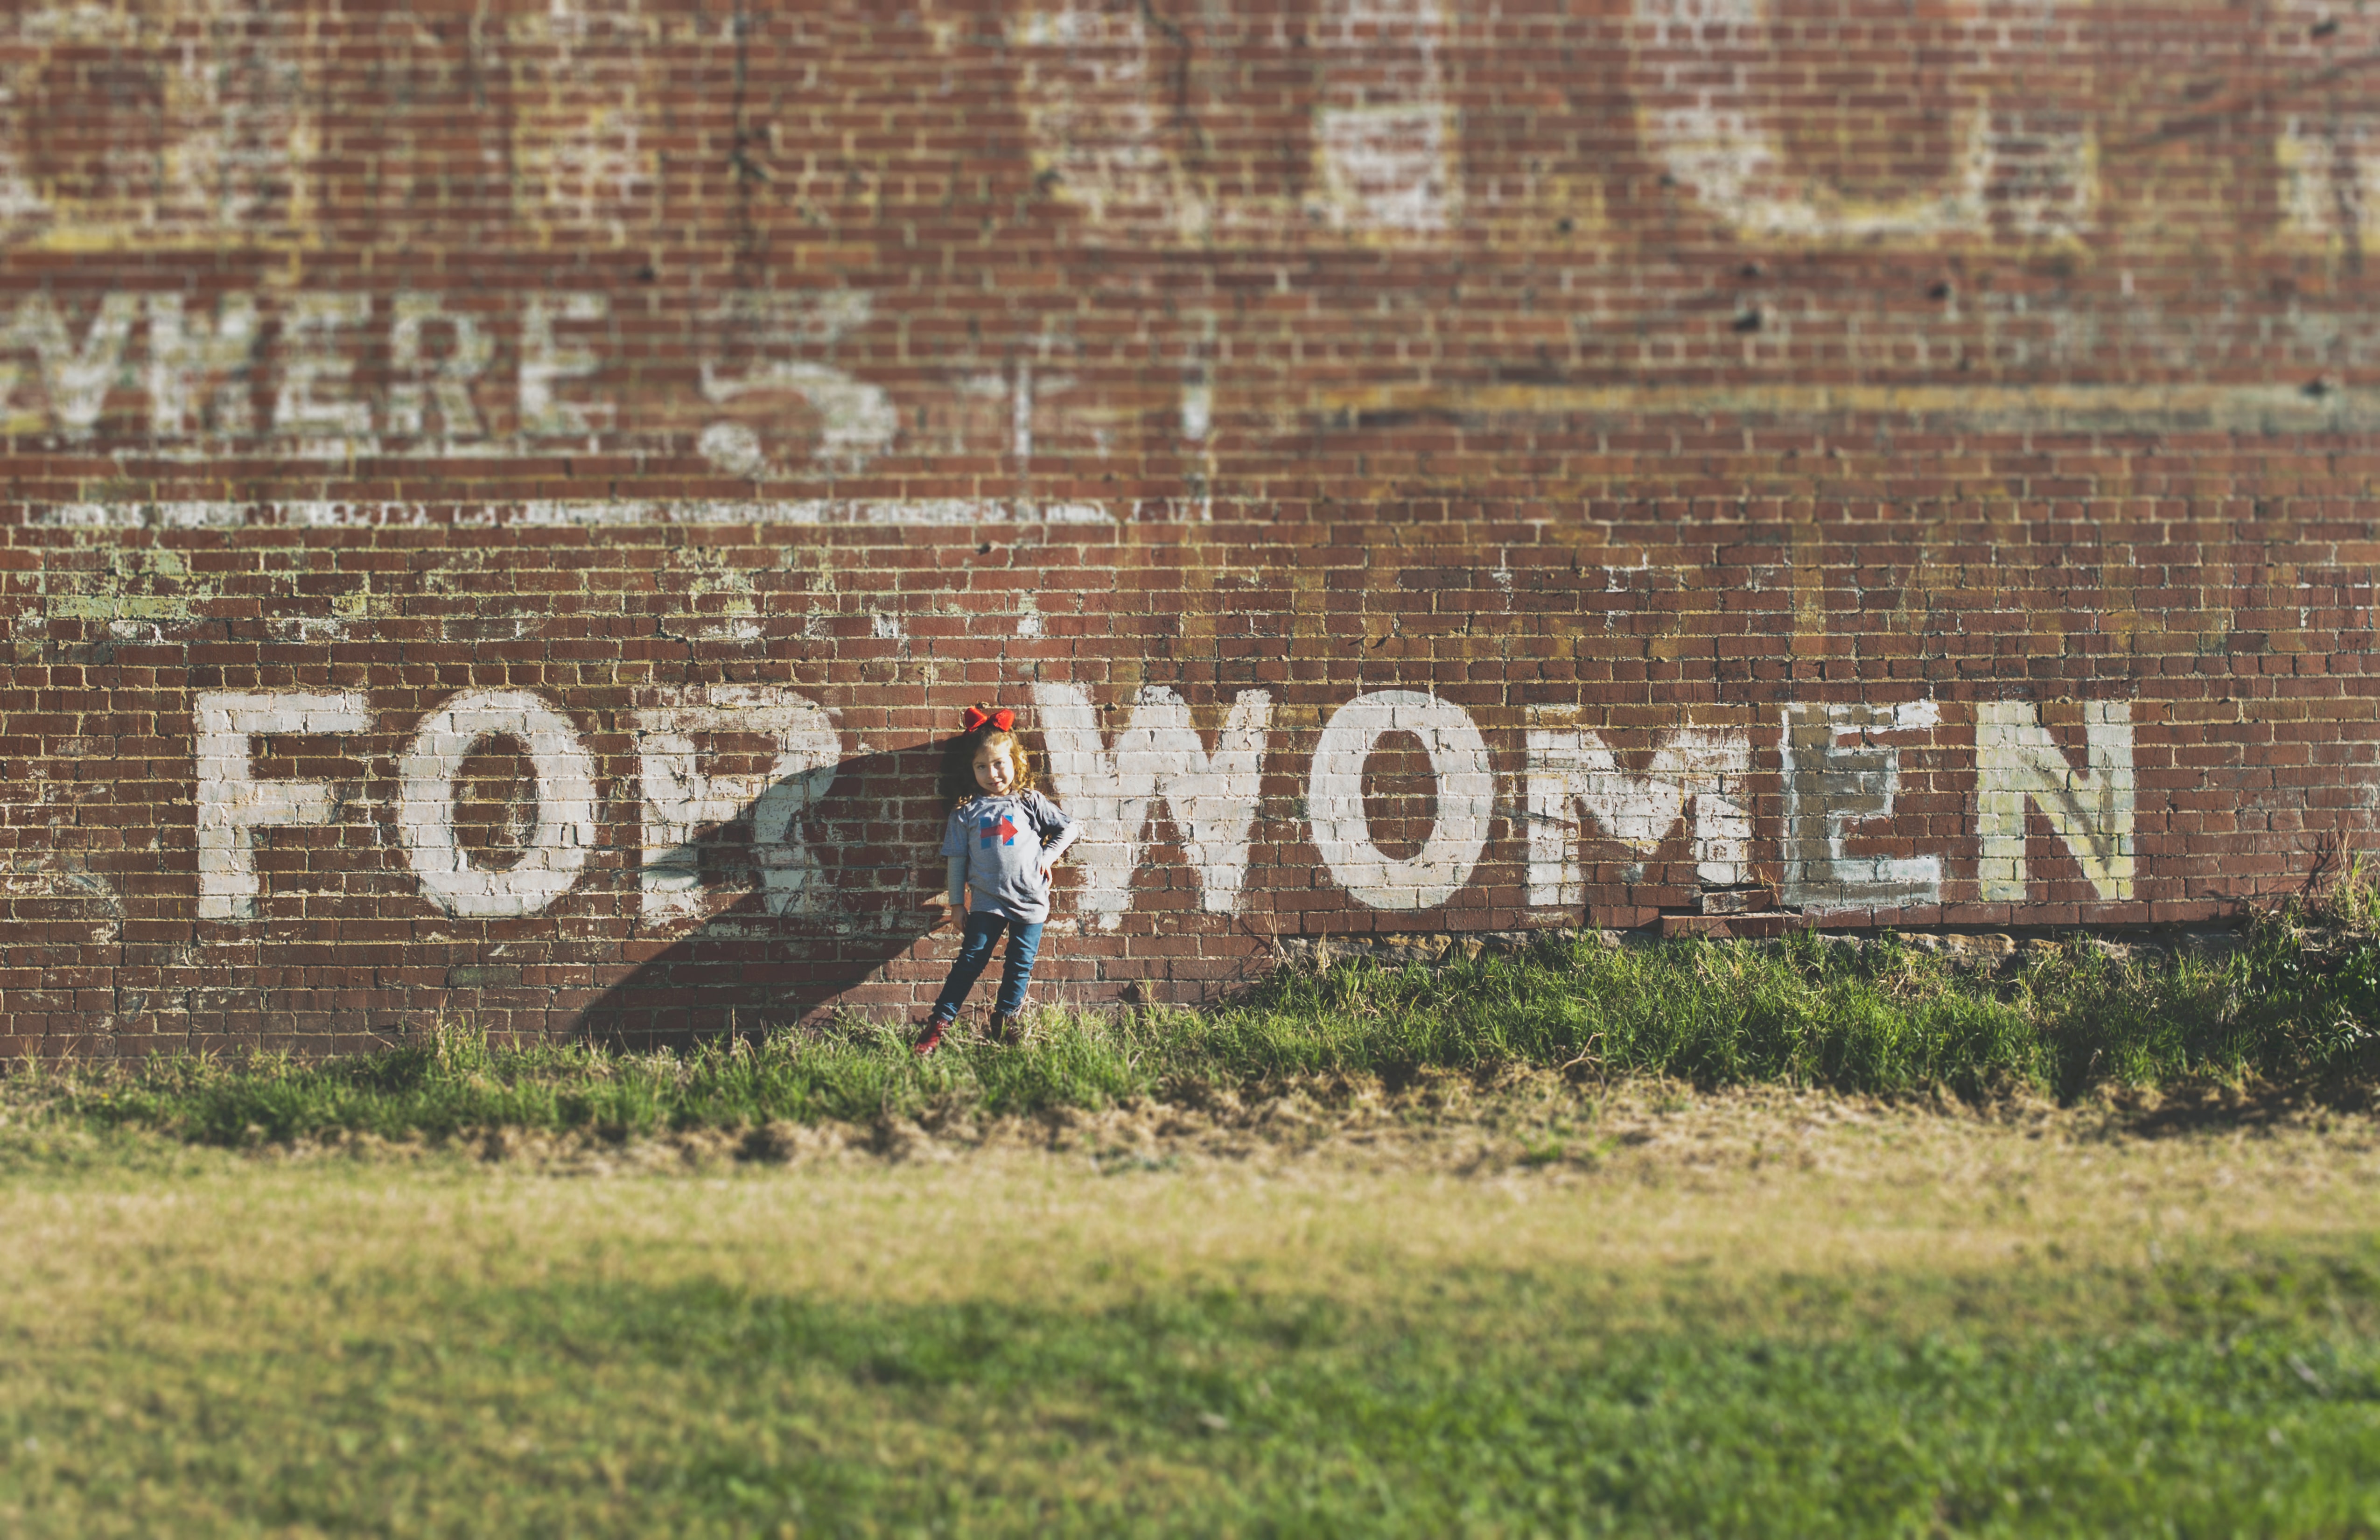 Brick wall with graffiti "for women" 